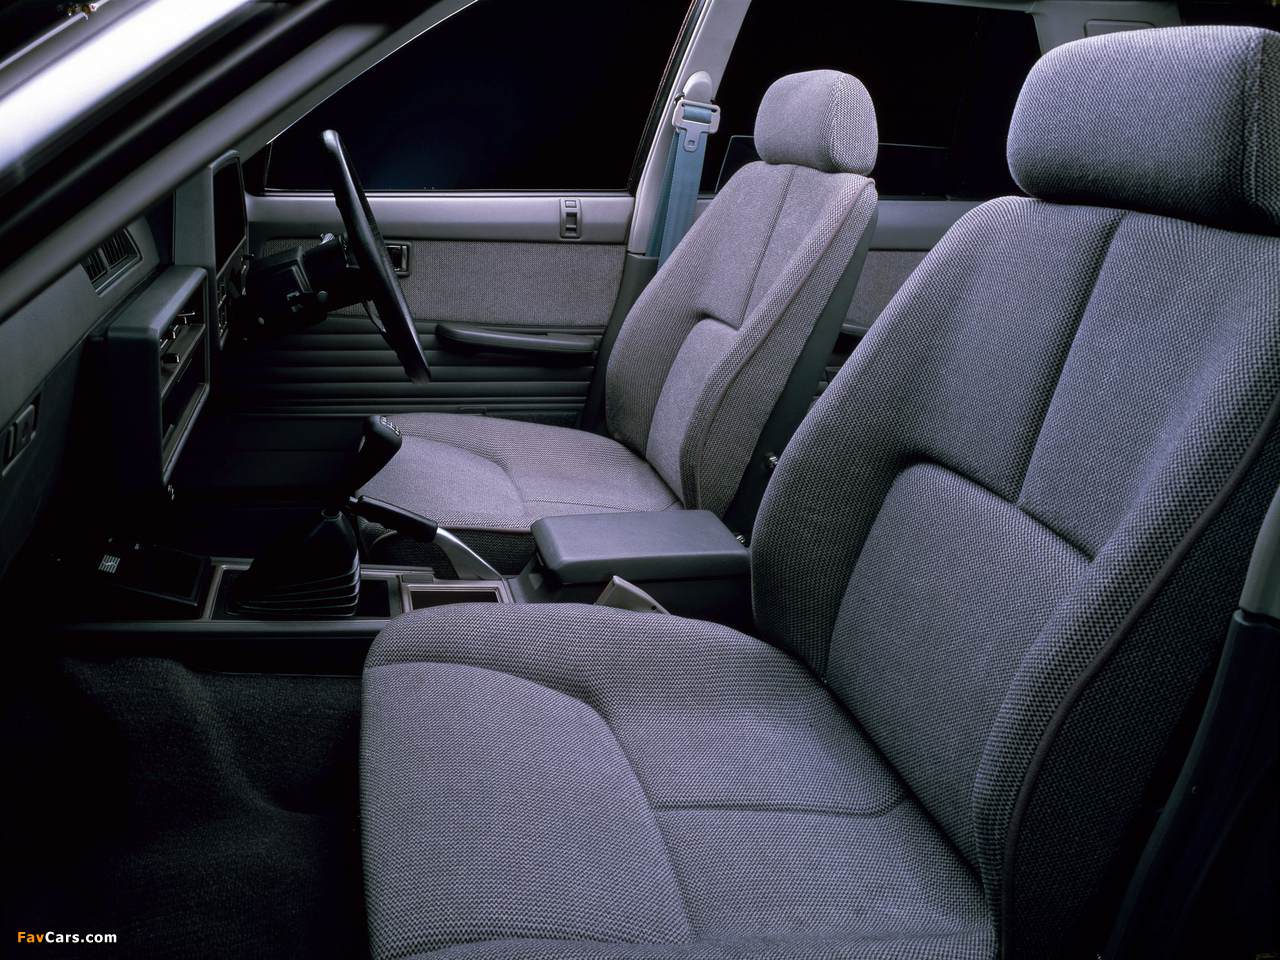 Nissan Skyline 2000 Turbo RS Sedan (DR30JFT) 1983 photos (1280 x 960)